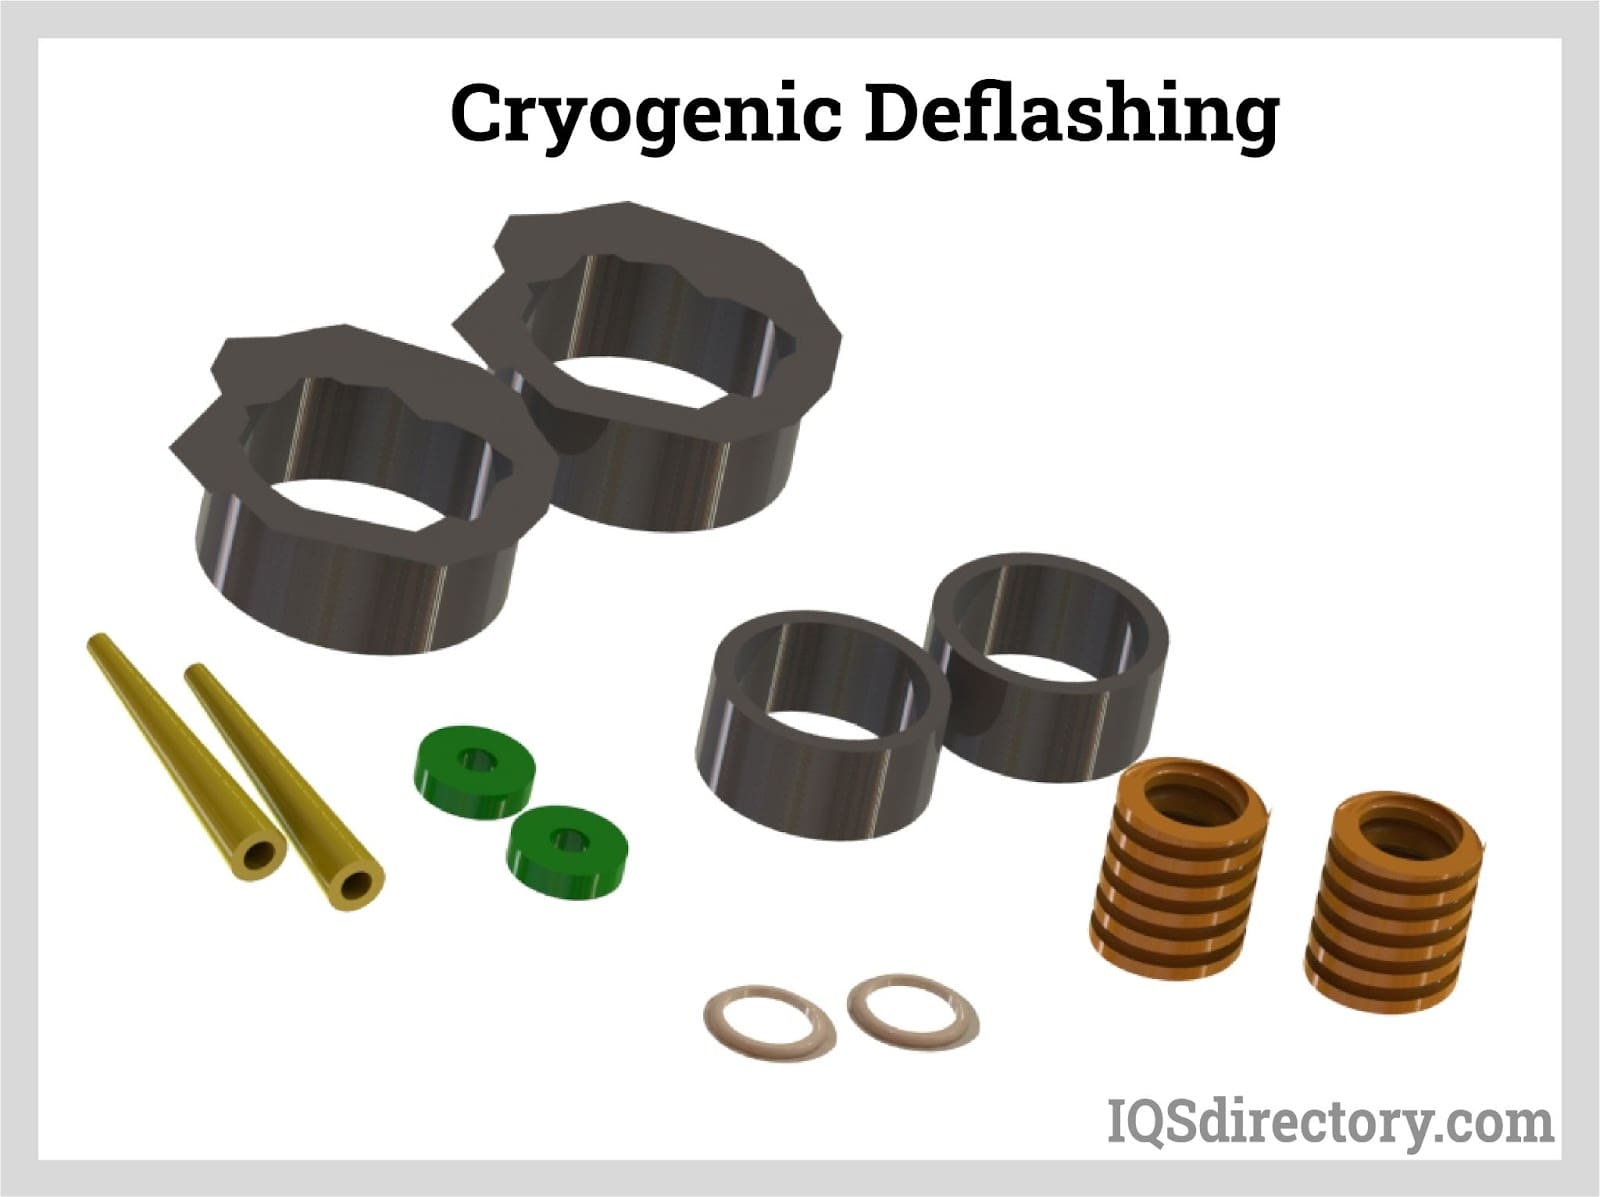 Cryogenic Deflashing